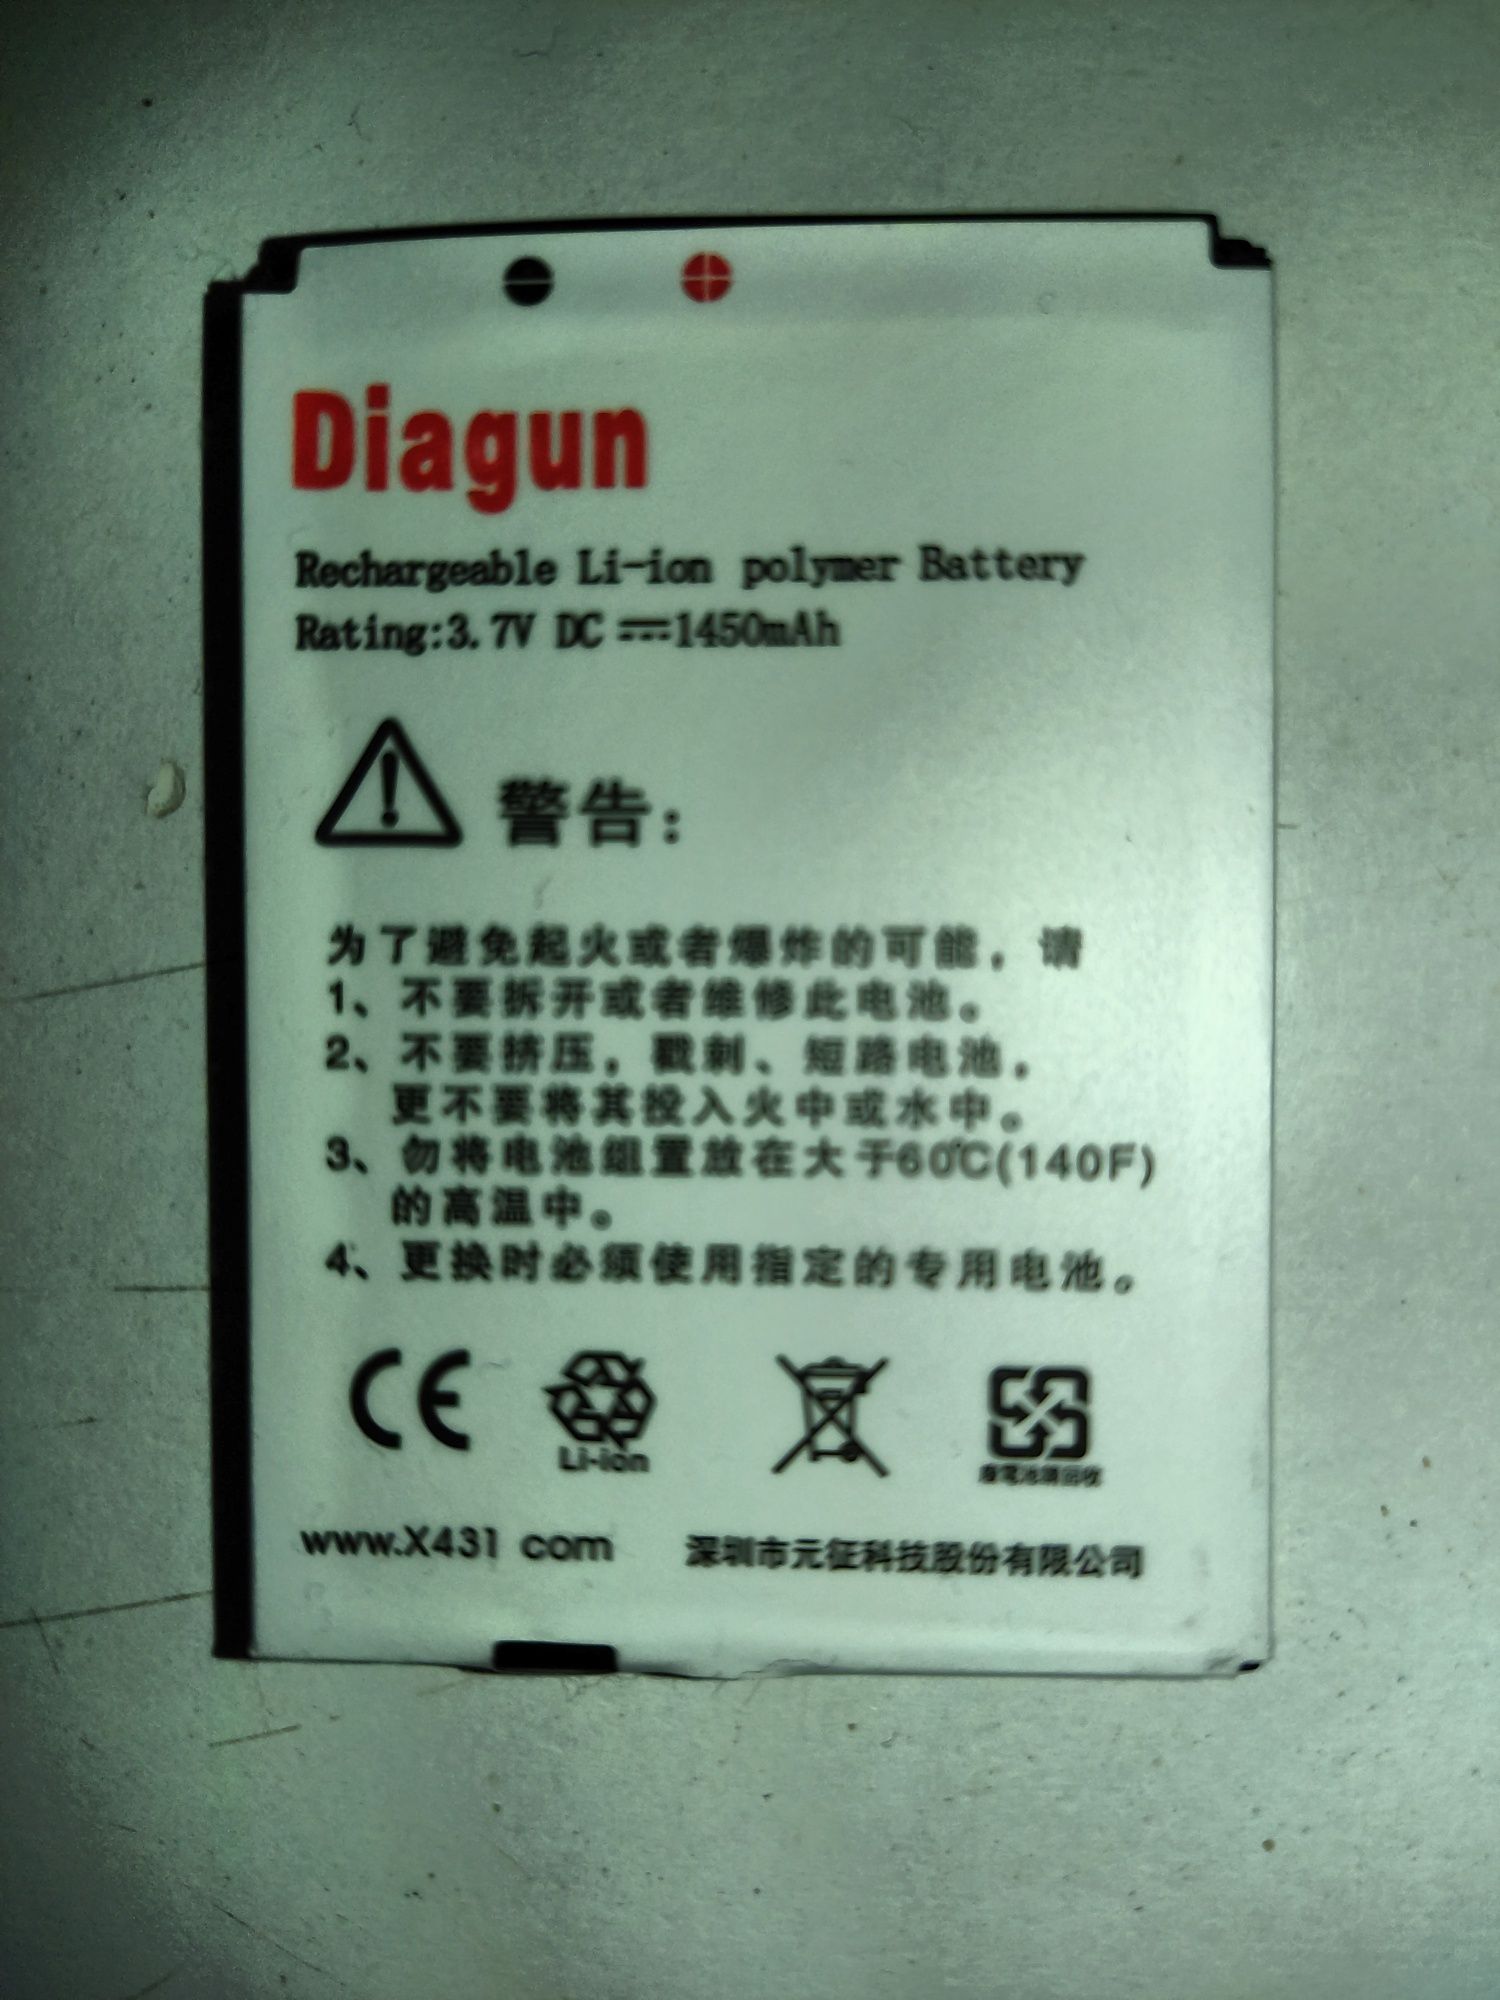 аккумулятор для Diagun 2 экран дисплей диаган 431 launch